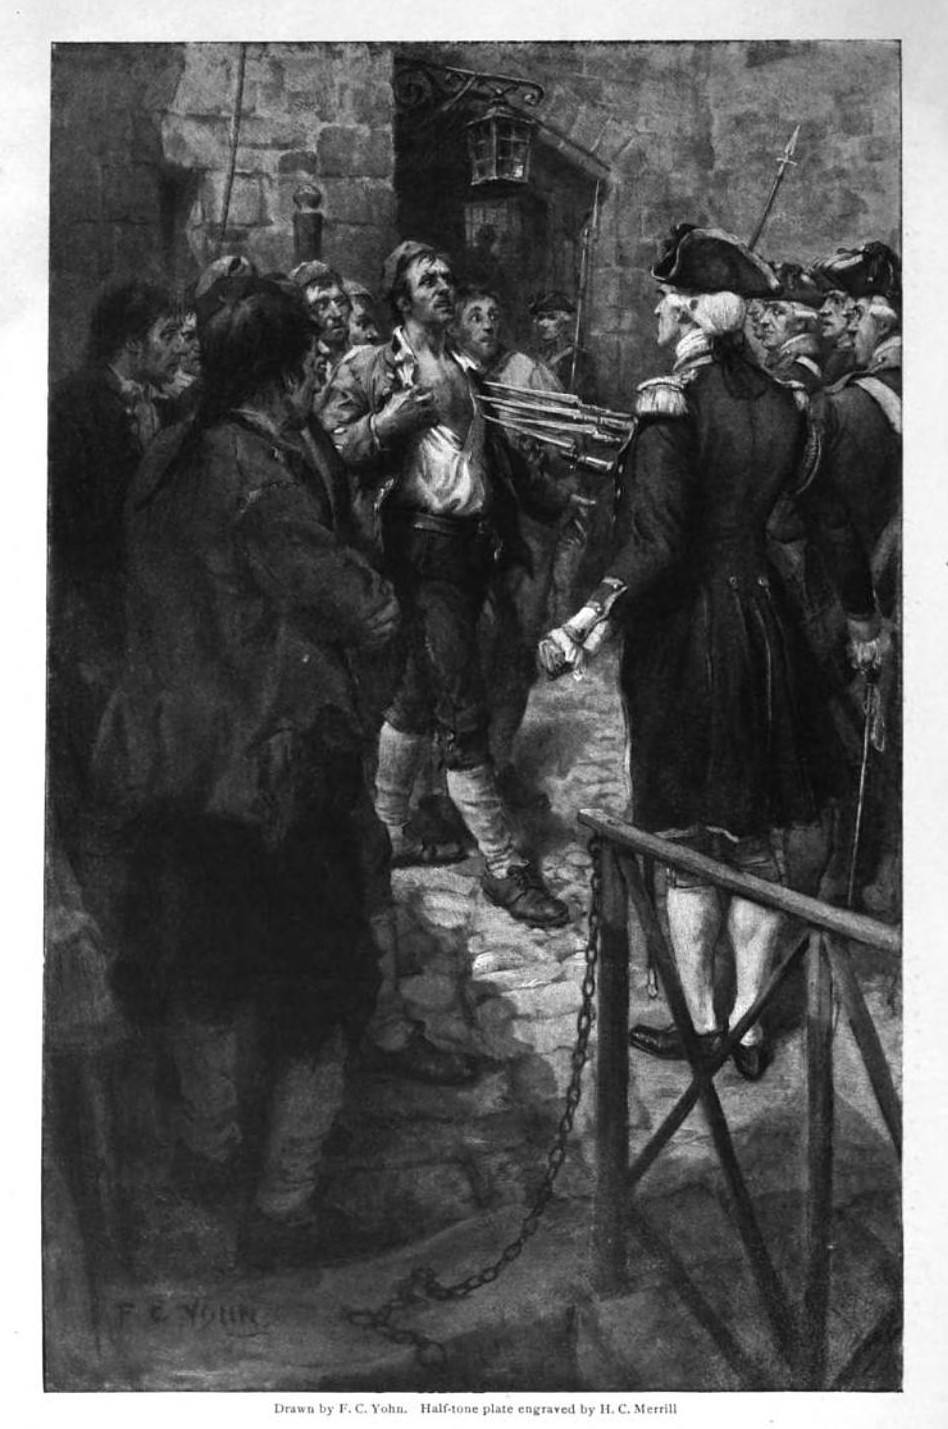 Ethan Allen being held captive before Captain Prescott in Montreal, 1775 by H.C. Merrill